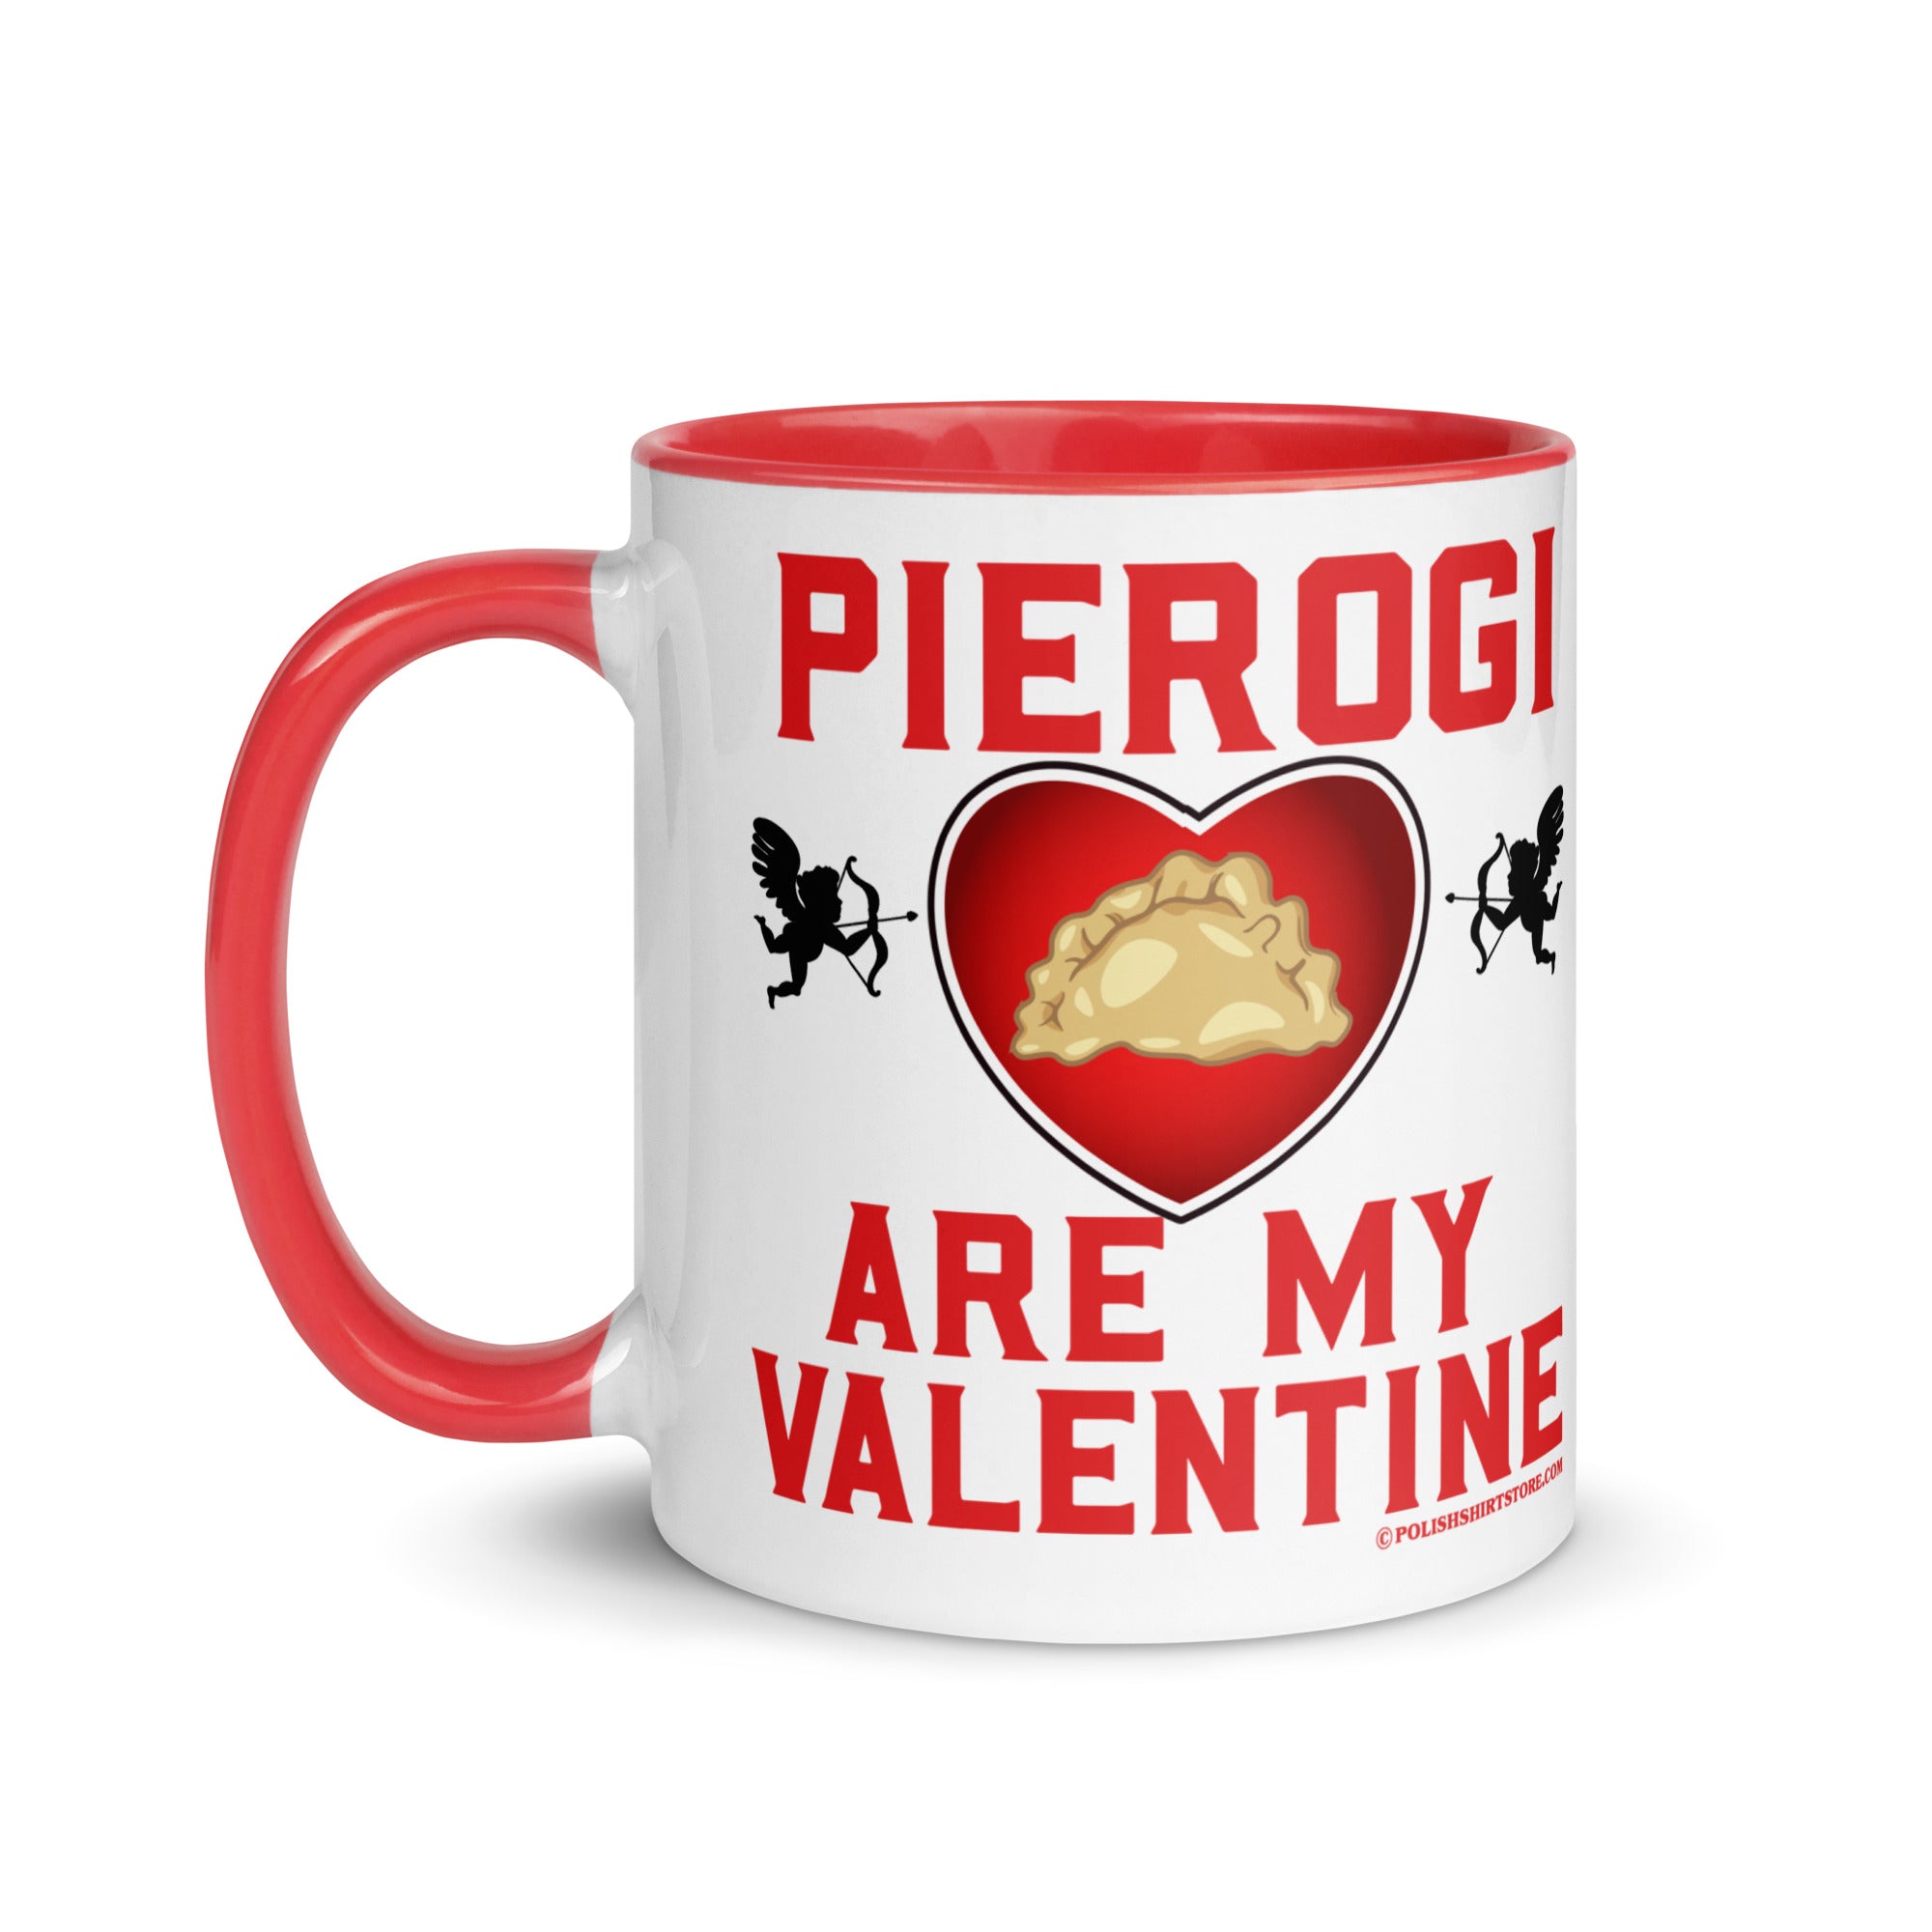 Pierogi Are My Valentine Coffee Mug with Color Inside  Polish Shirt Store   